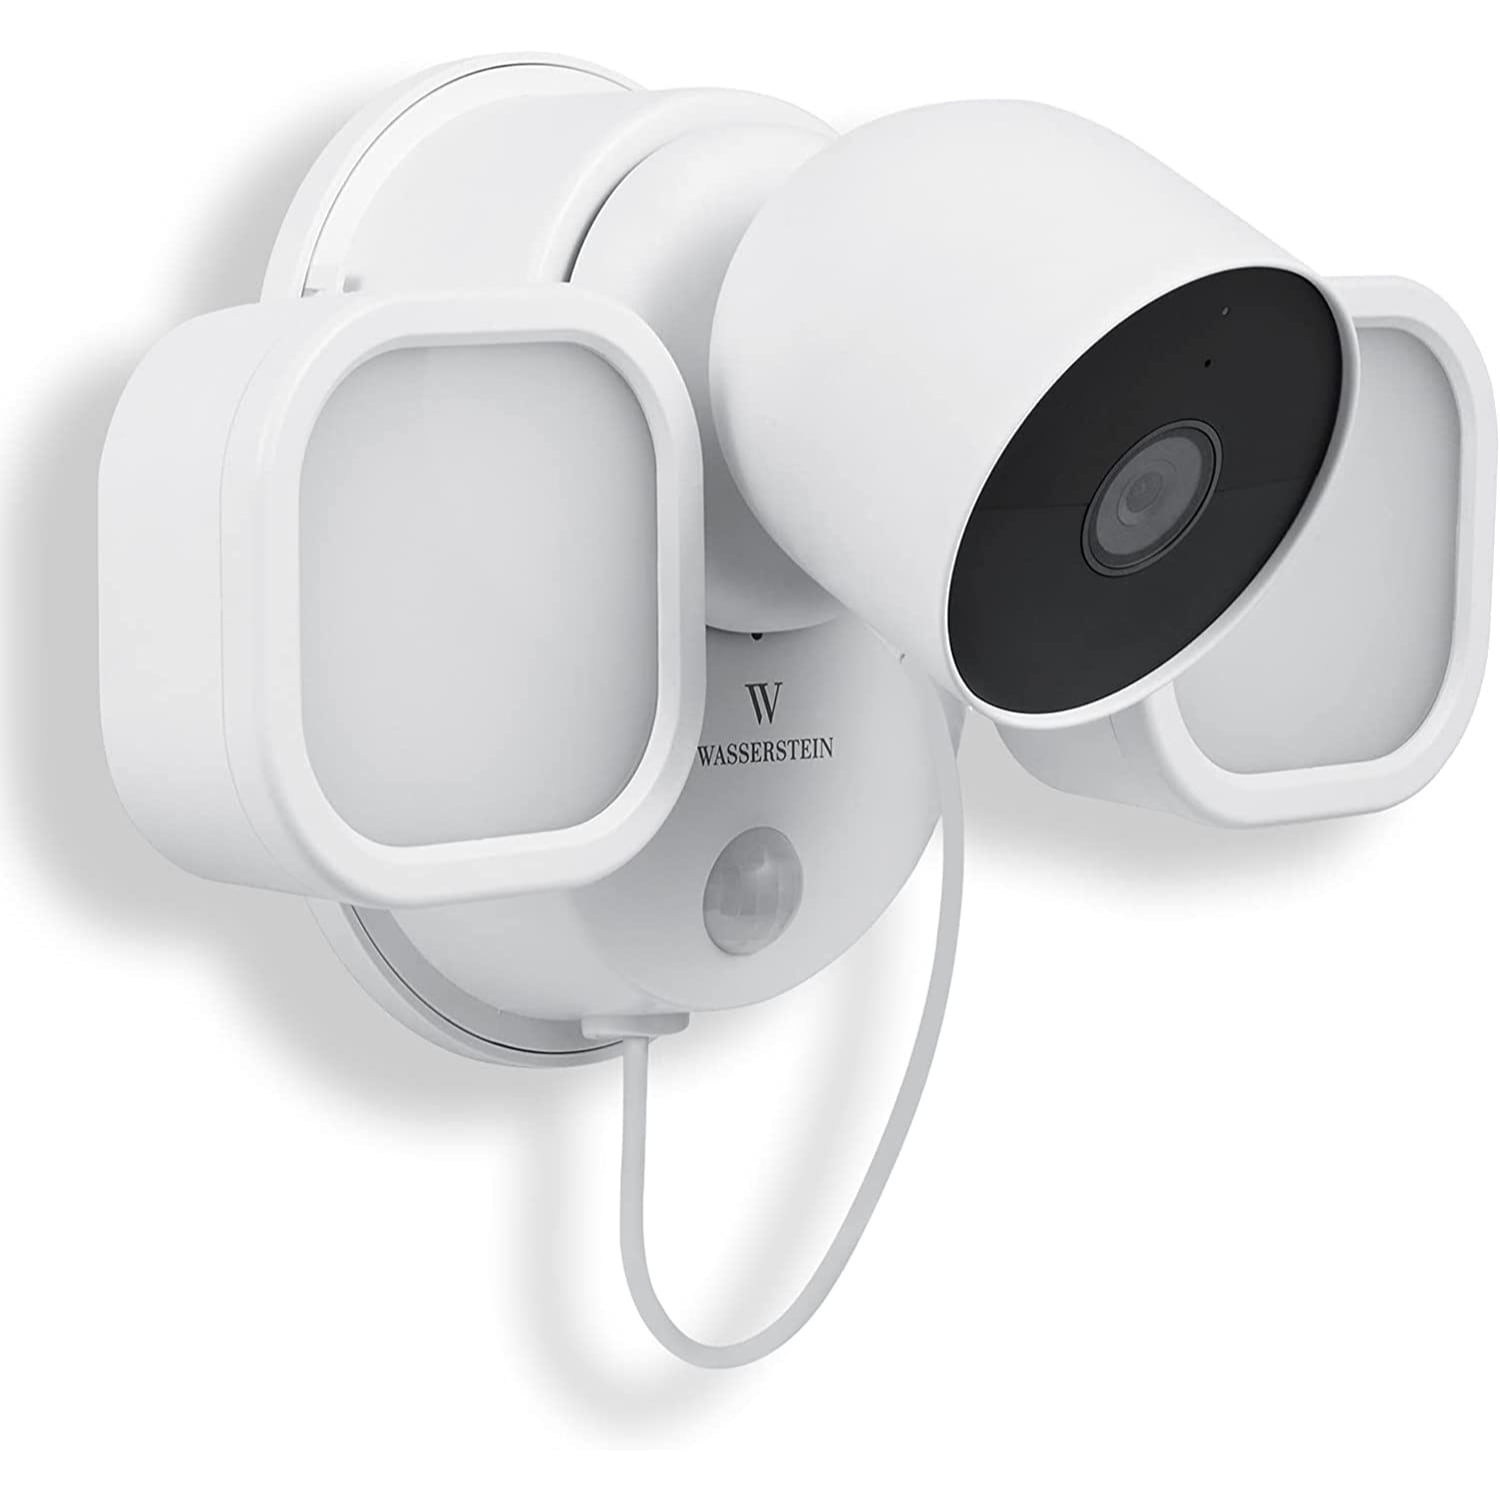 Google Nest Cam with Floodlight Wireless Indoor/Outdoor Security Camera -  Snow